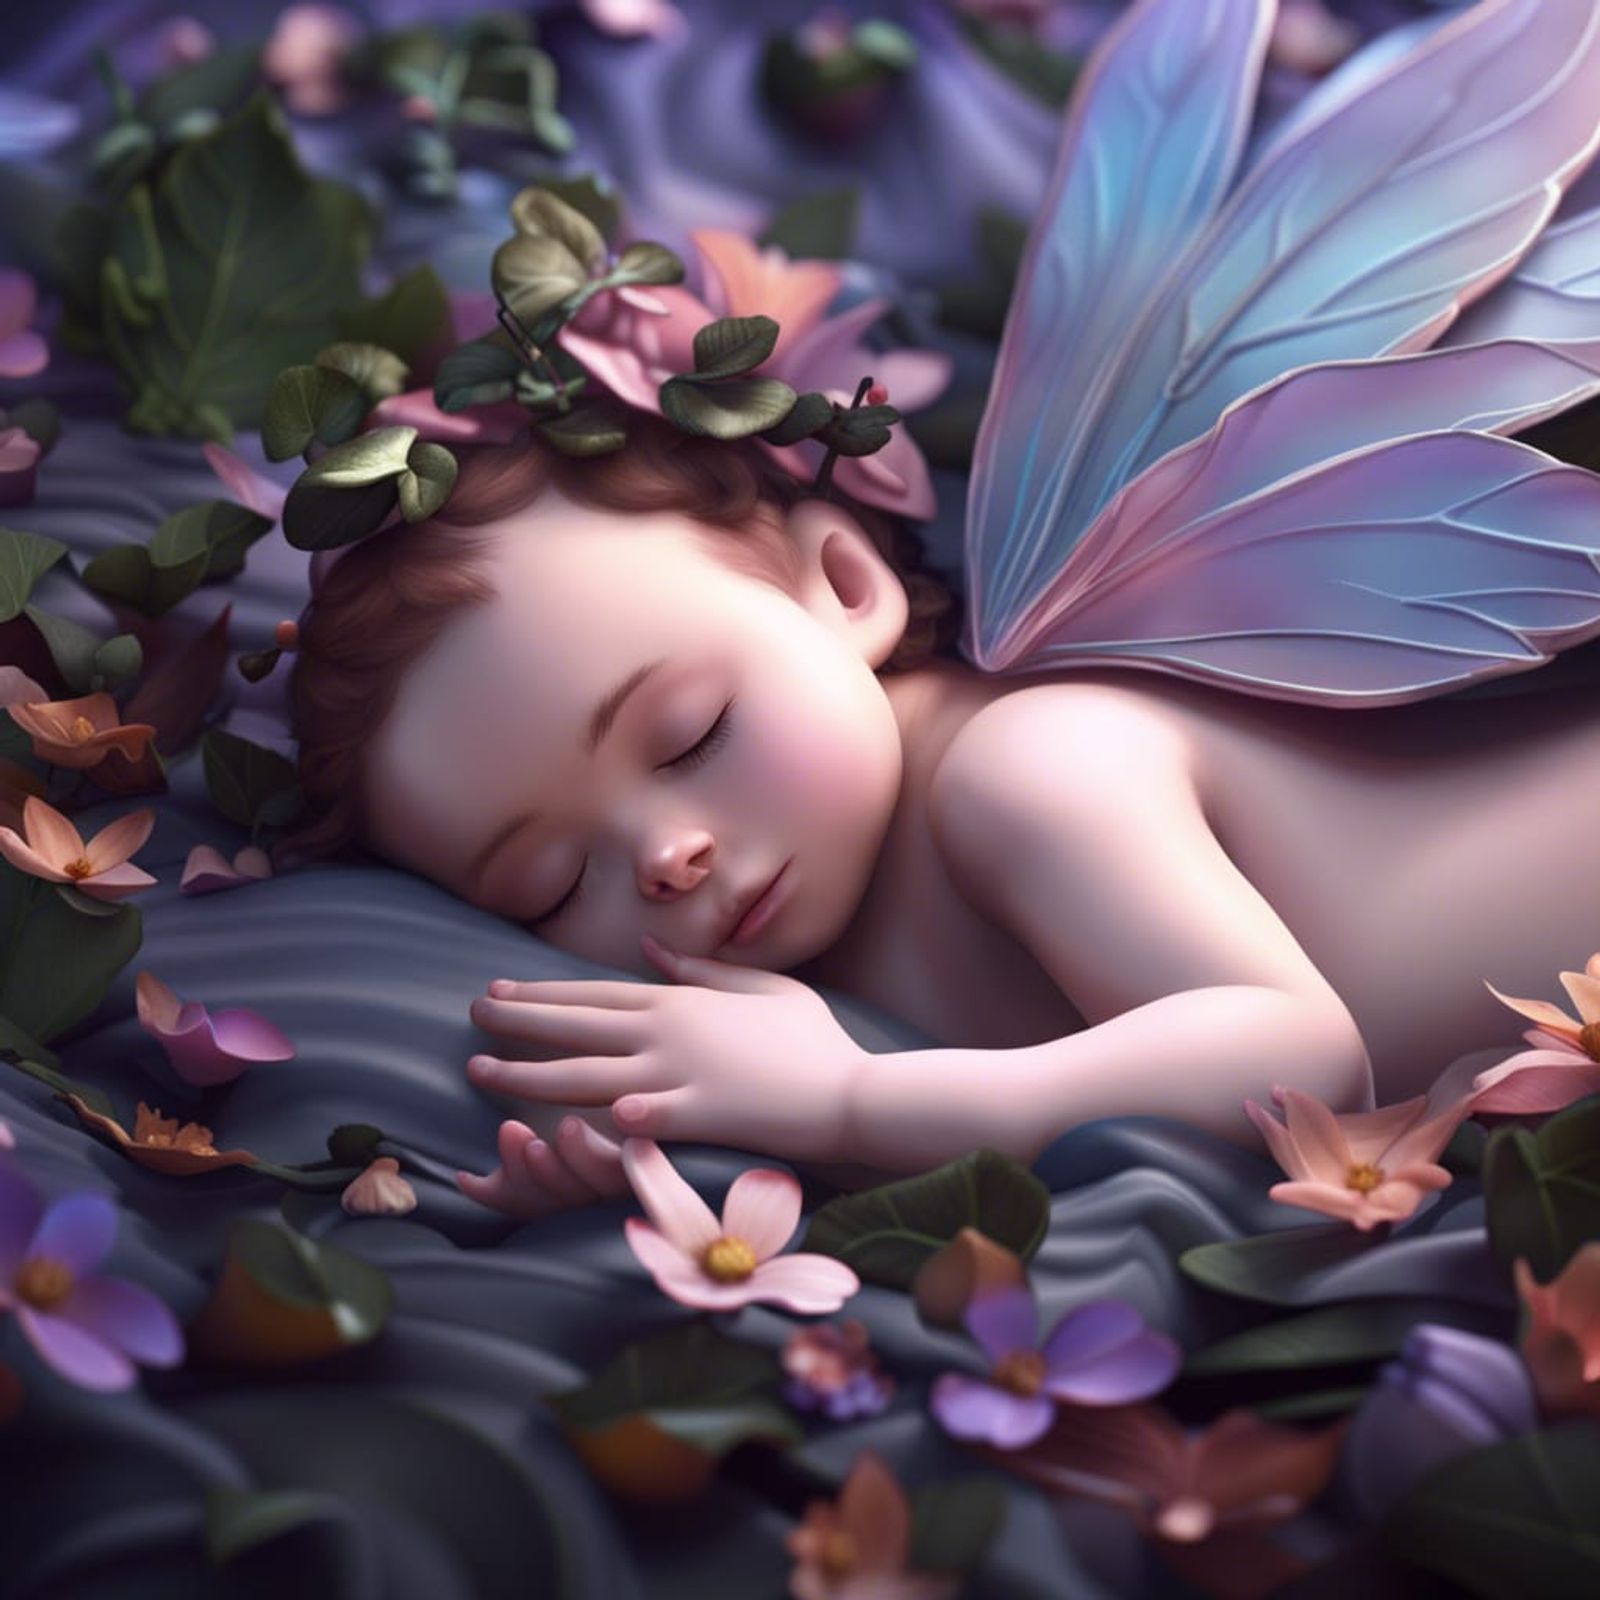 cute baby fairies wallpapers